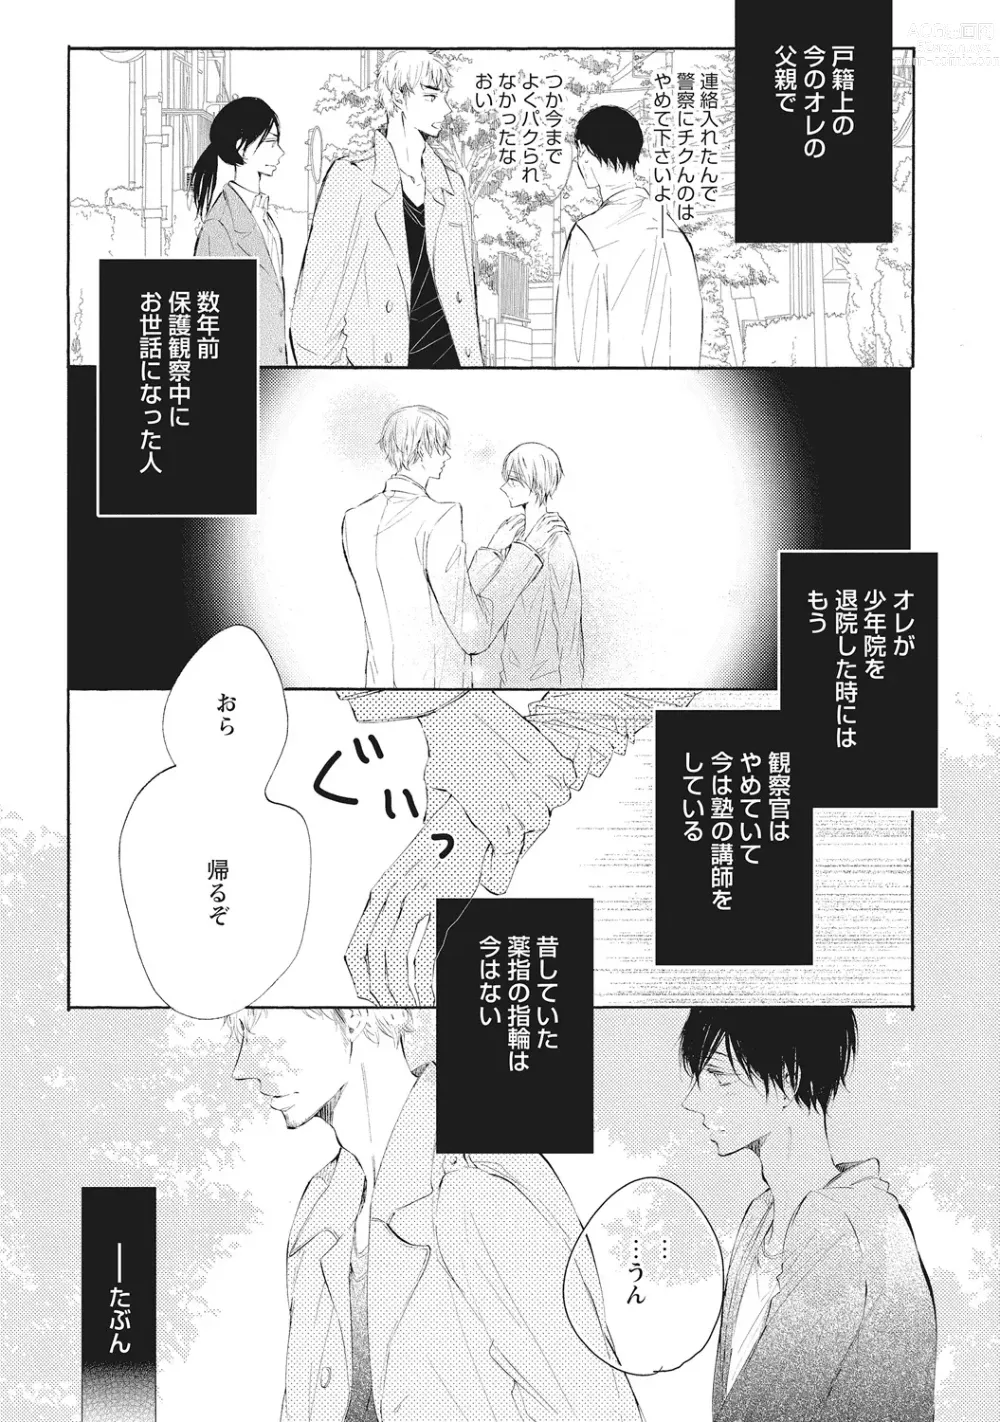 Page 15 of manga Kateinai Seiai